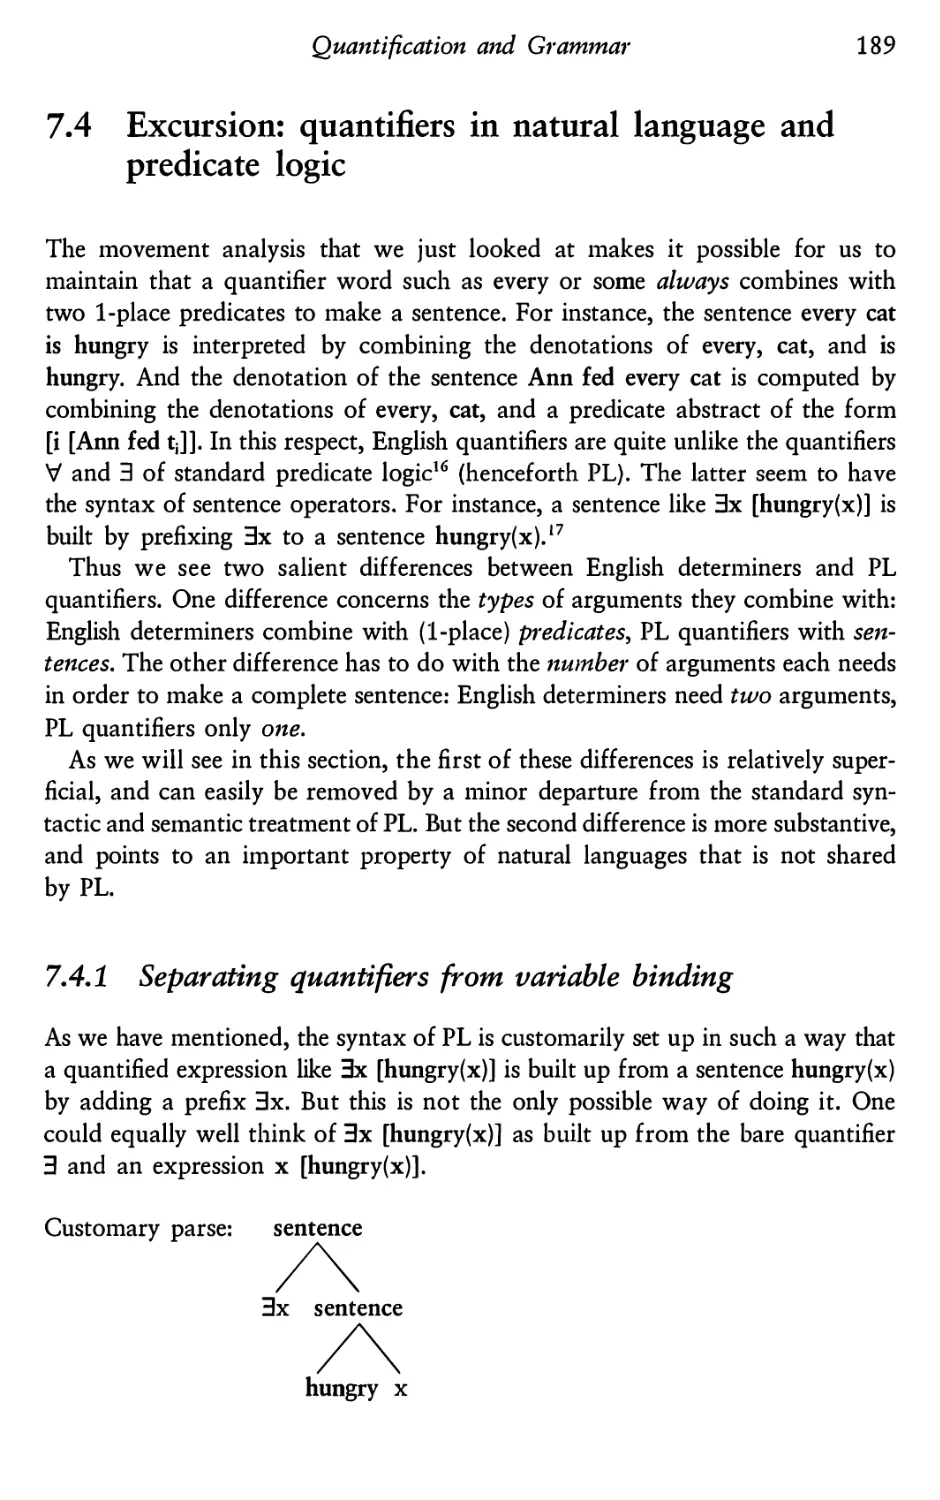 7.4 Excursion: quantifiers in natural language and predicate logic